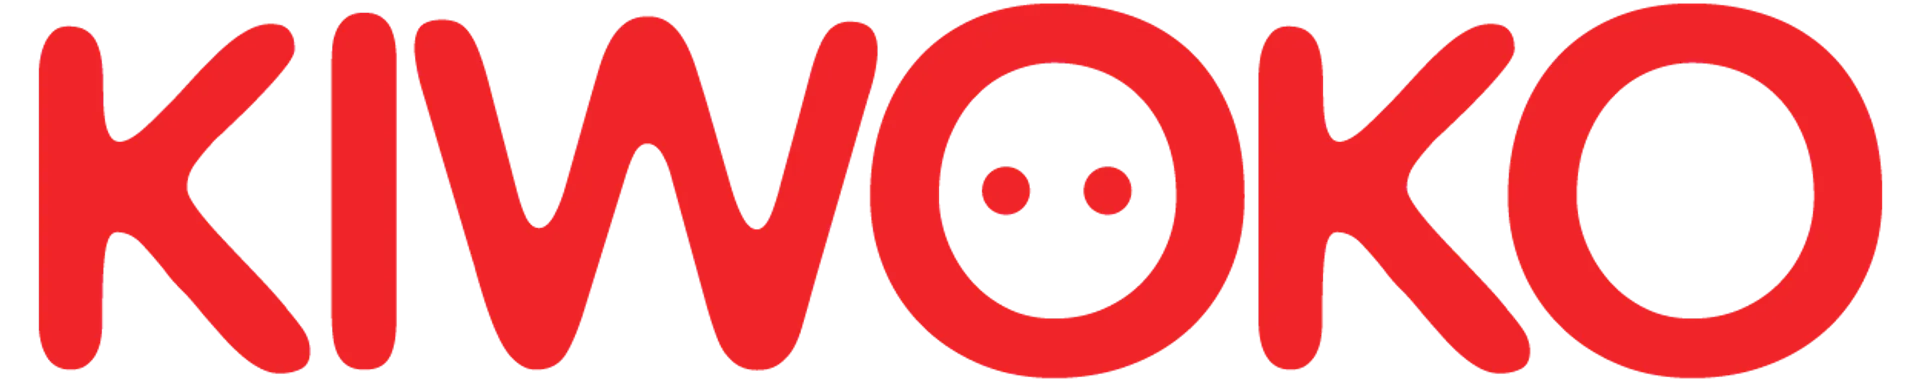 KIWOKO logo de folhetos